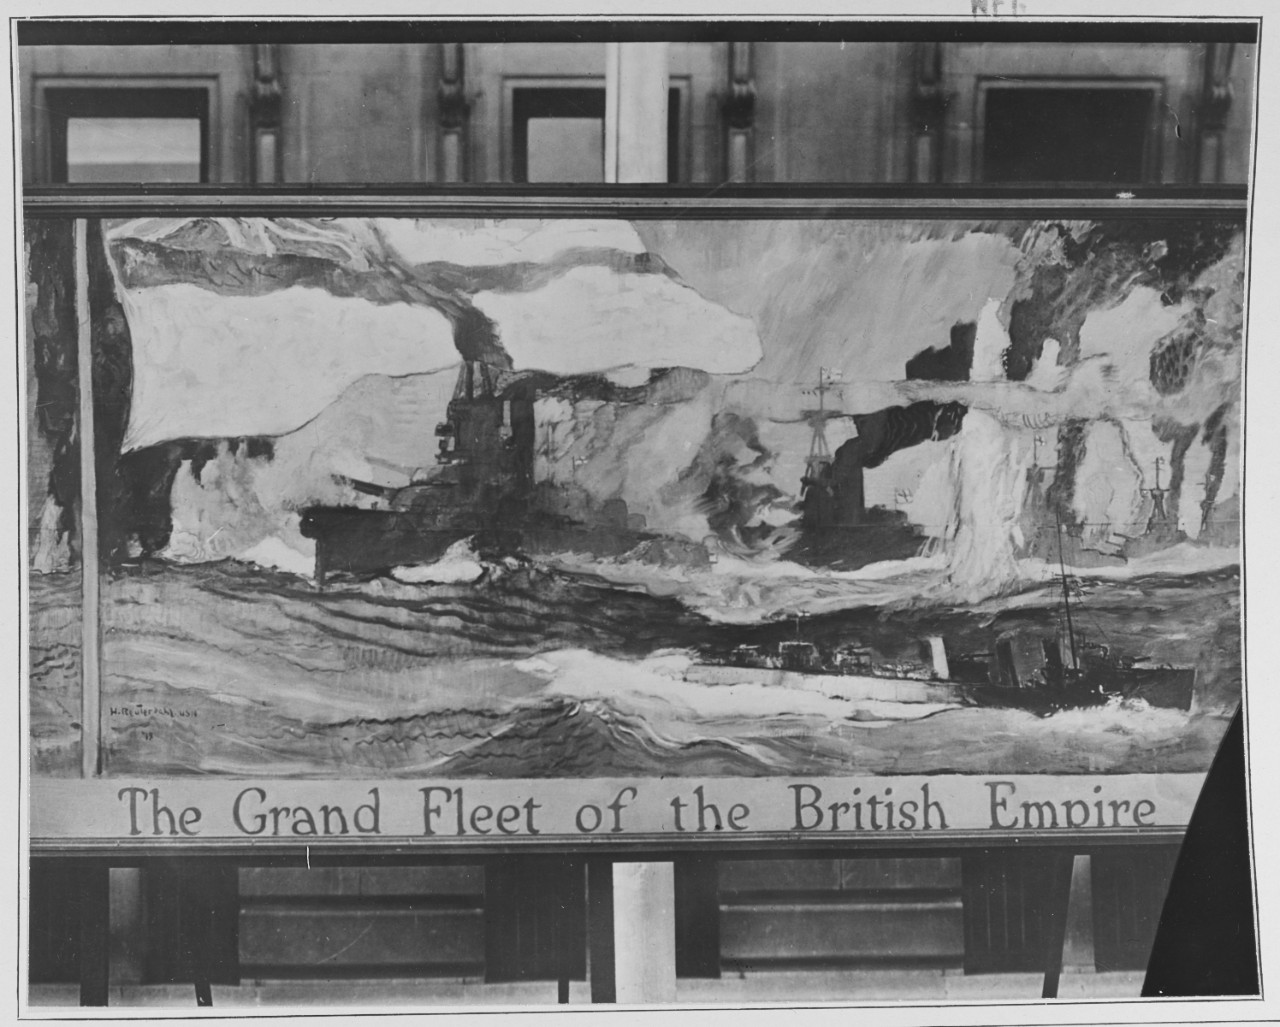 The Grant Fleet of the British Empire